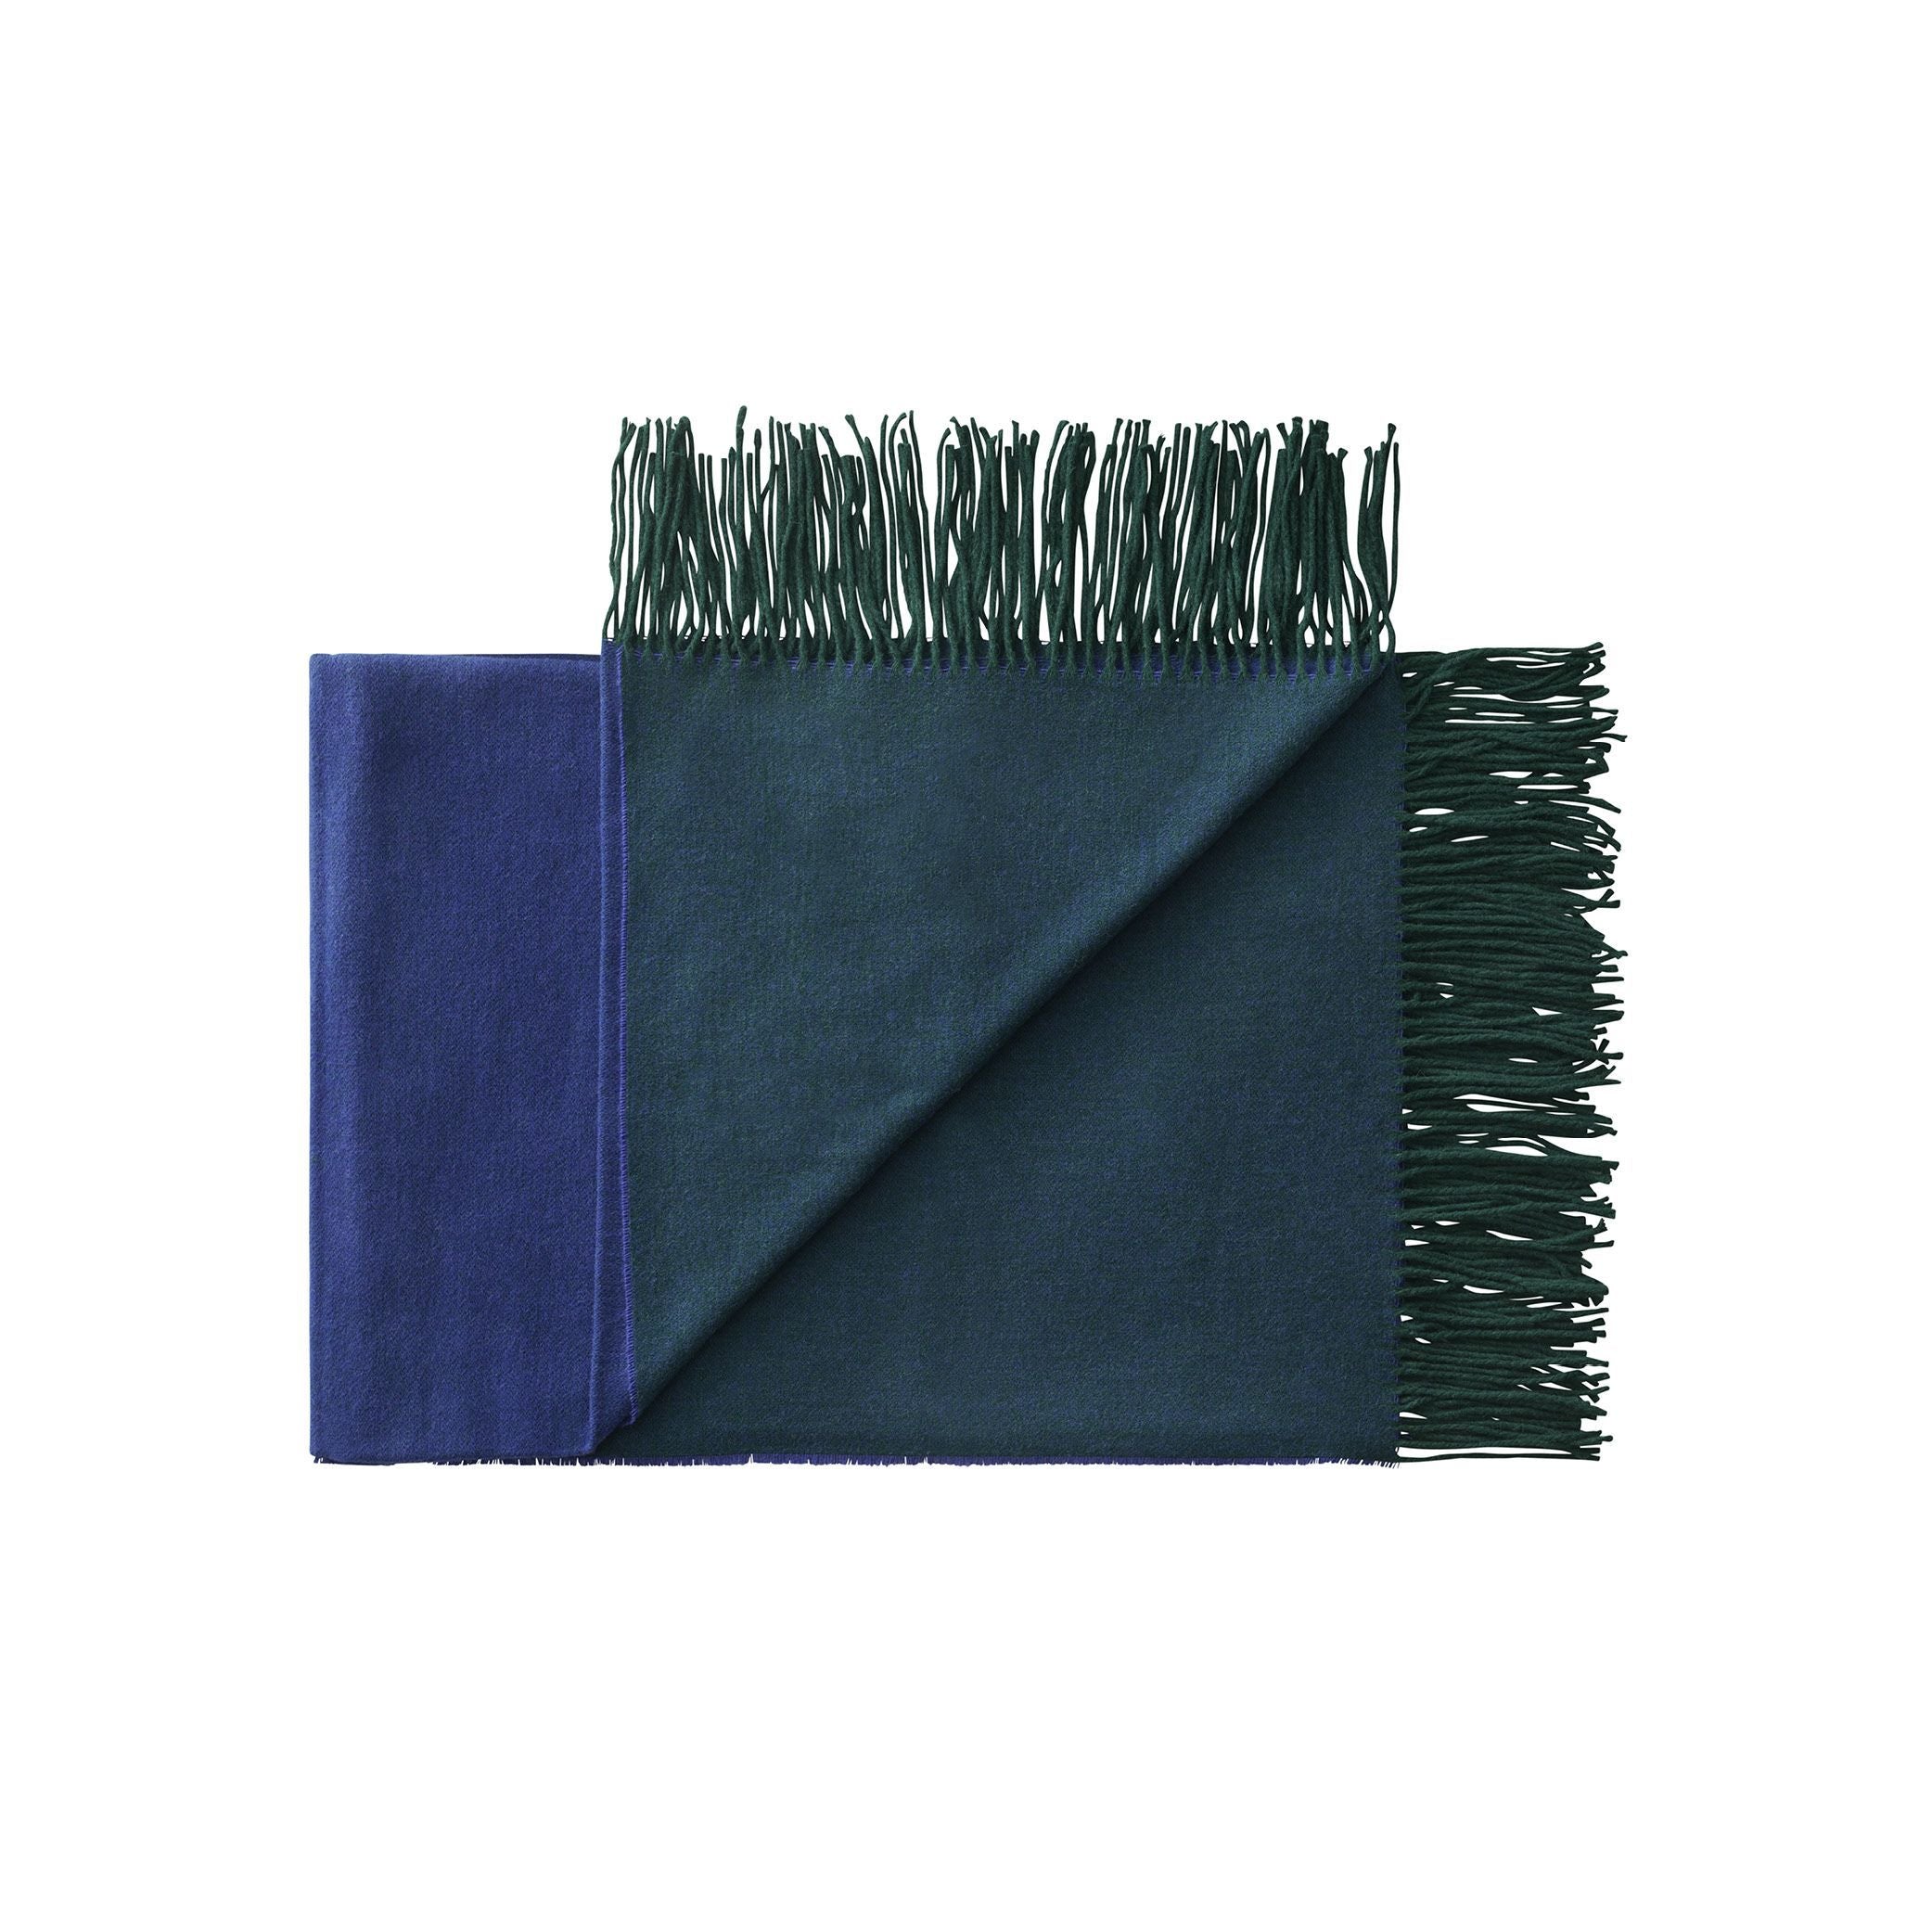 Silkorg Uldspinderi Franja Throw 170x140 cm, verde/azul